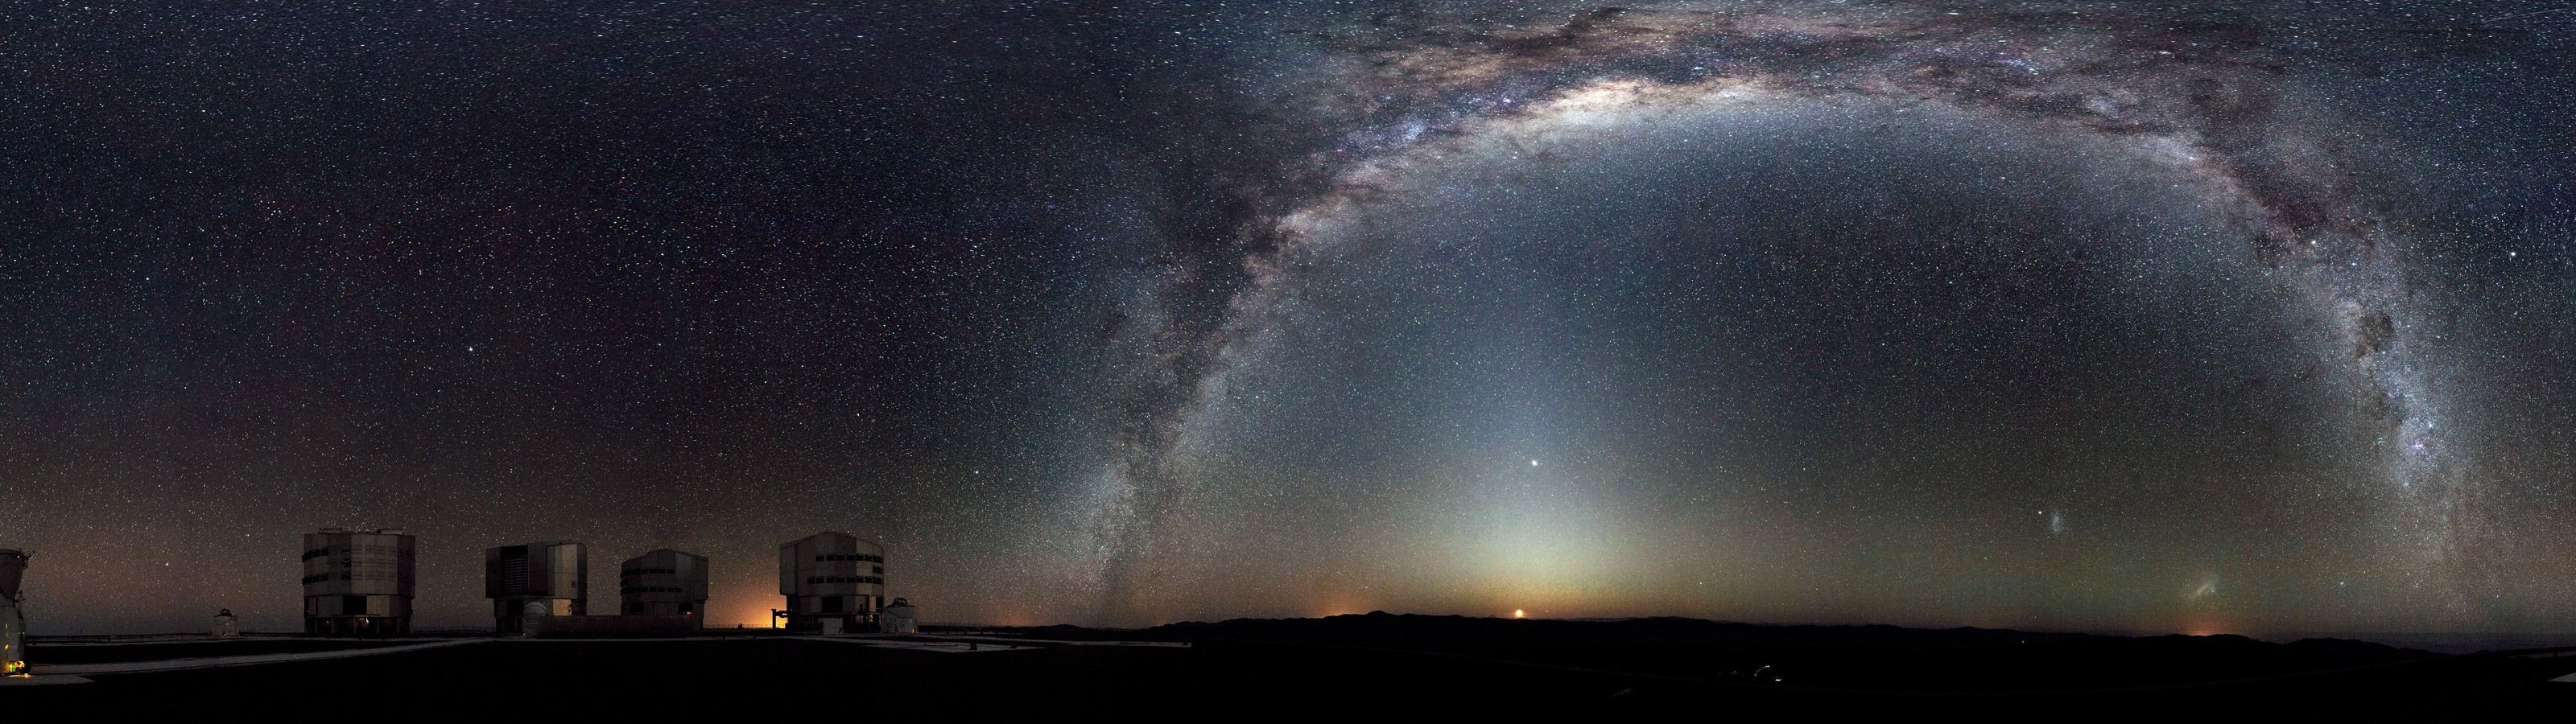 Stars Observatory Milky Way HD Wallpaper Space Plas